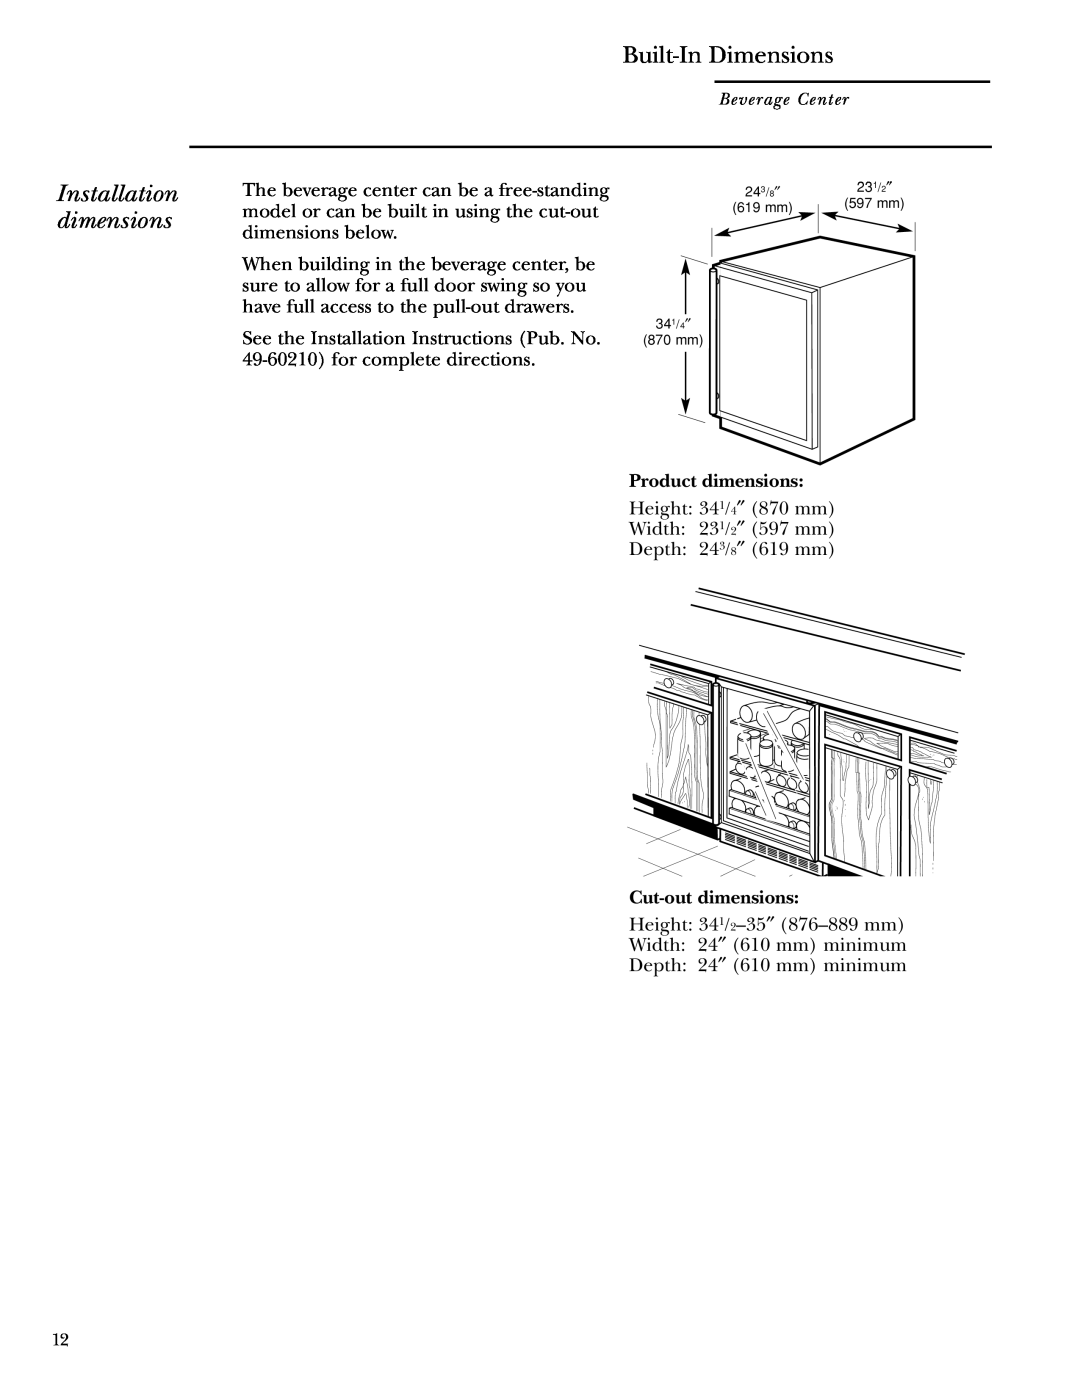 GE ZDBC240 owner manual Installation dimensions, Built-InDimensions, Product dimensions, Cut-outdimensions 